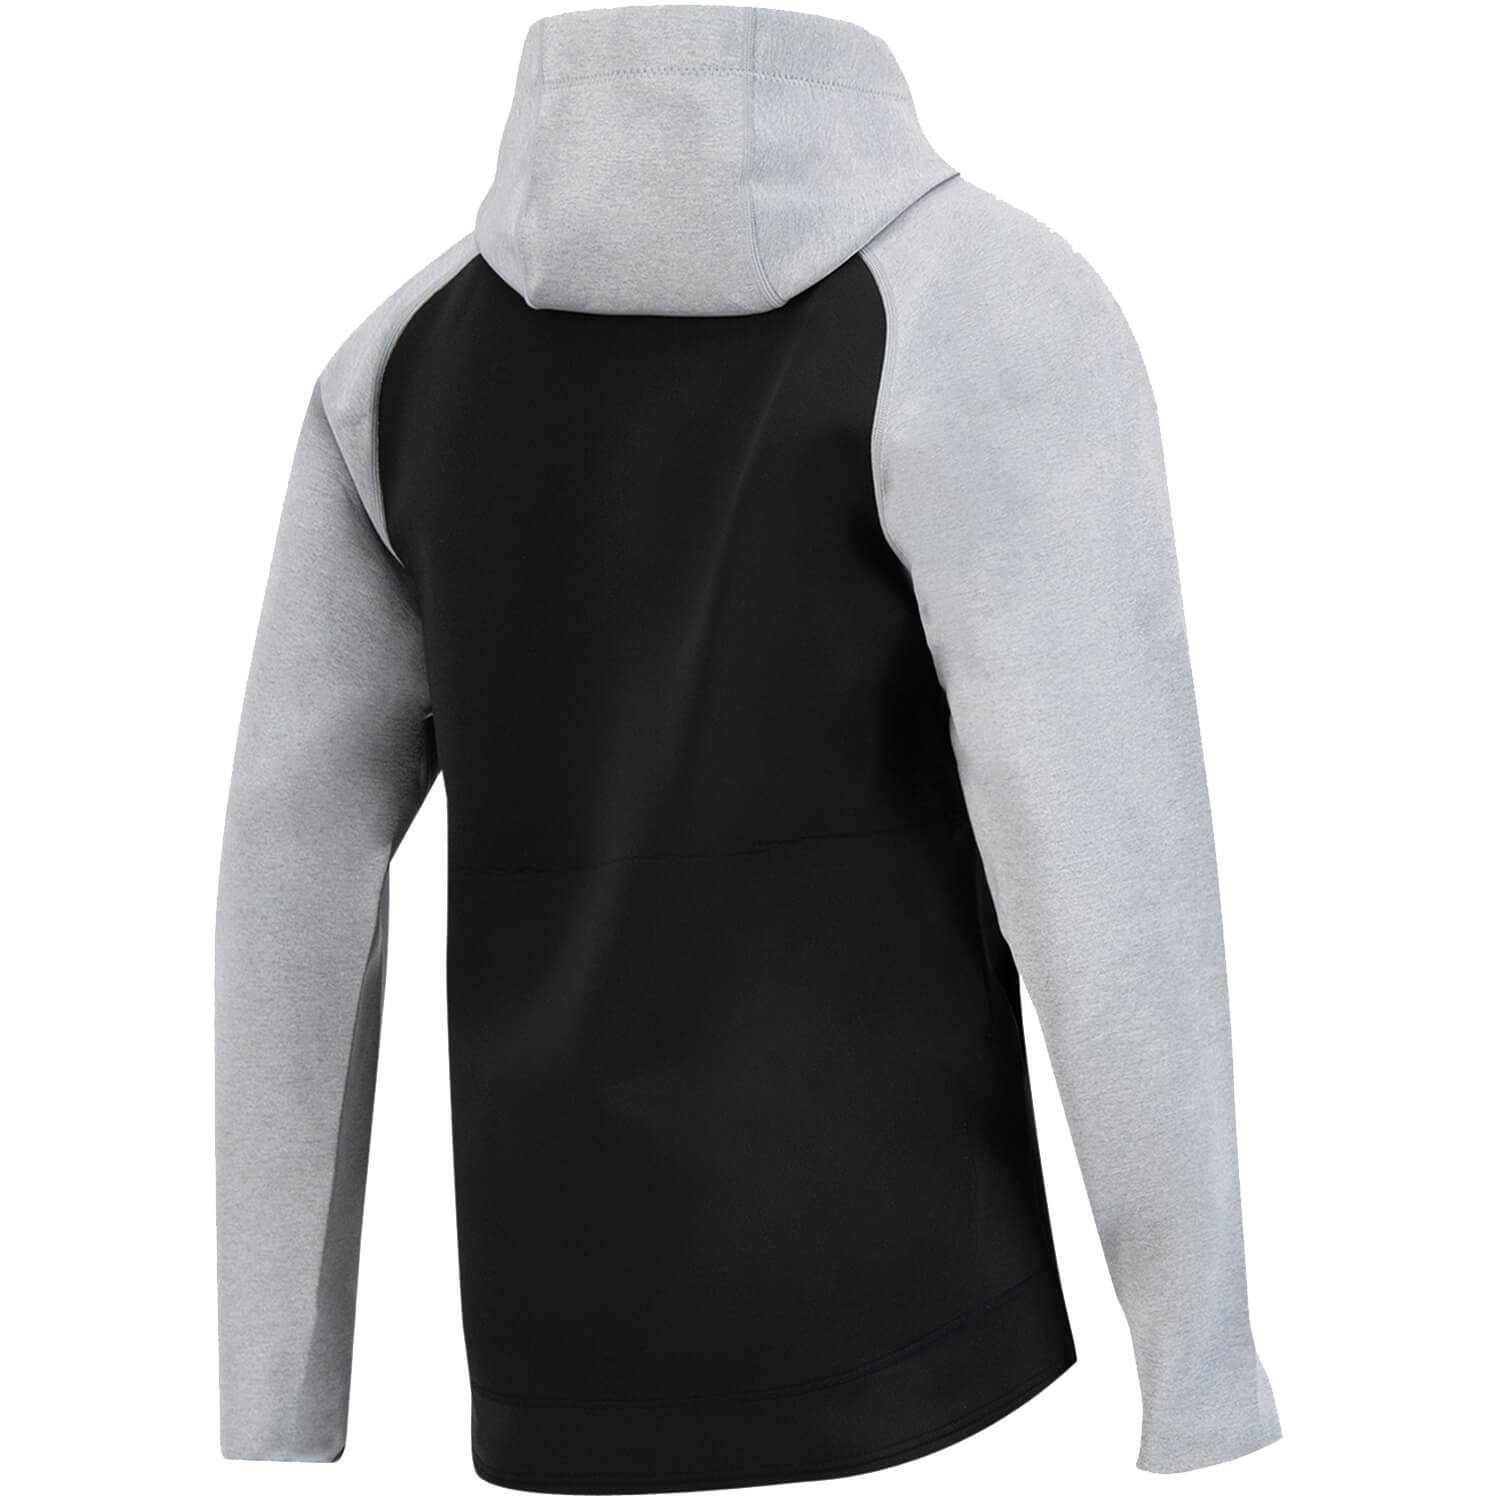 Bluza neoprenowa SUP – Hoody 1,5mm – męska Black-Grey tył